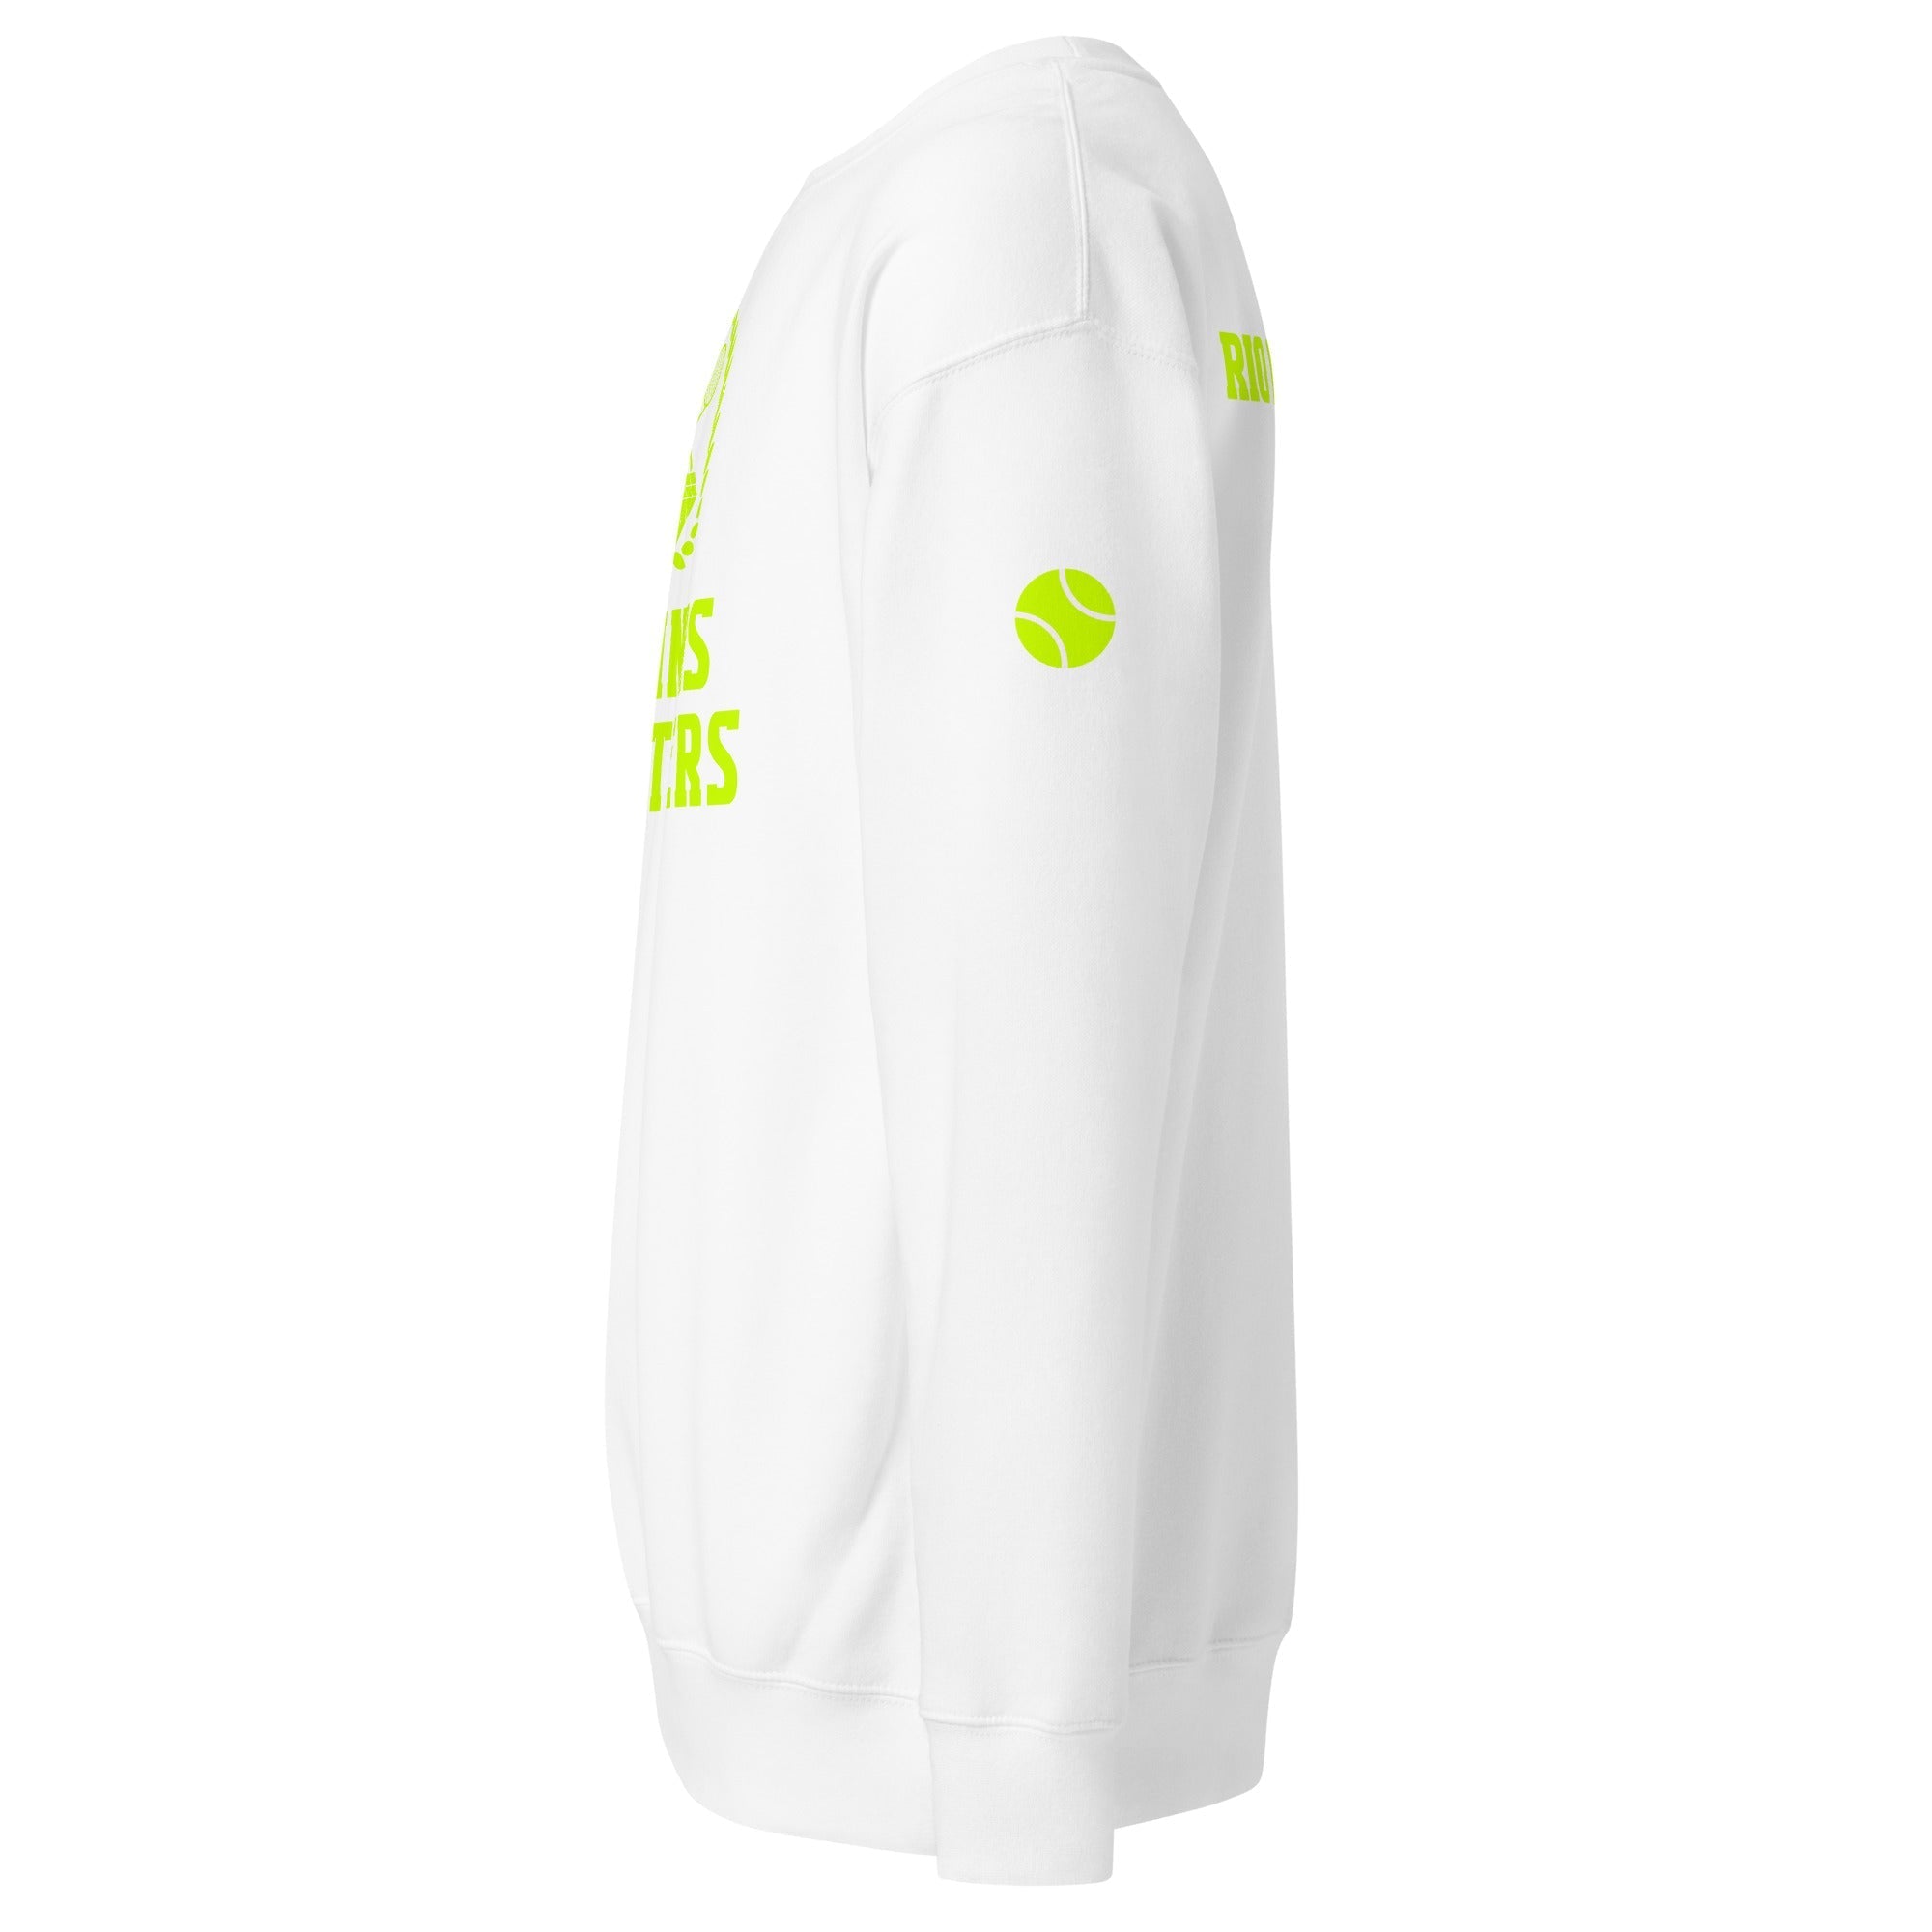 Unisex Premium Sweatshirt - Tennis Masters Rio De Janeiro - GRAPHIC T-SHIRTS